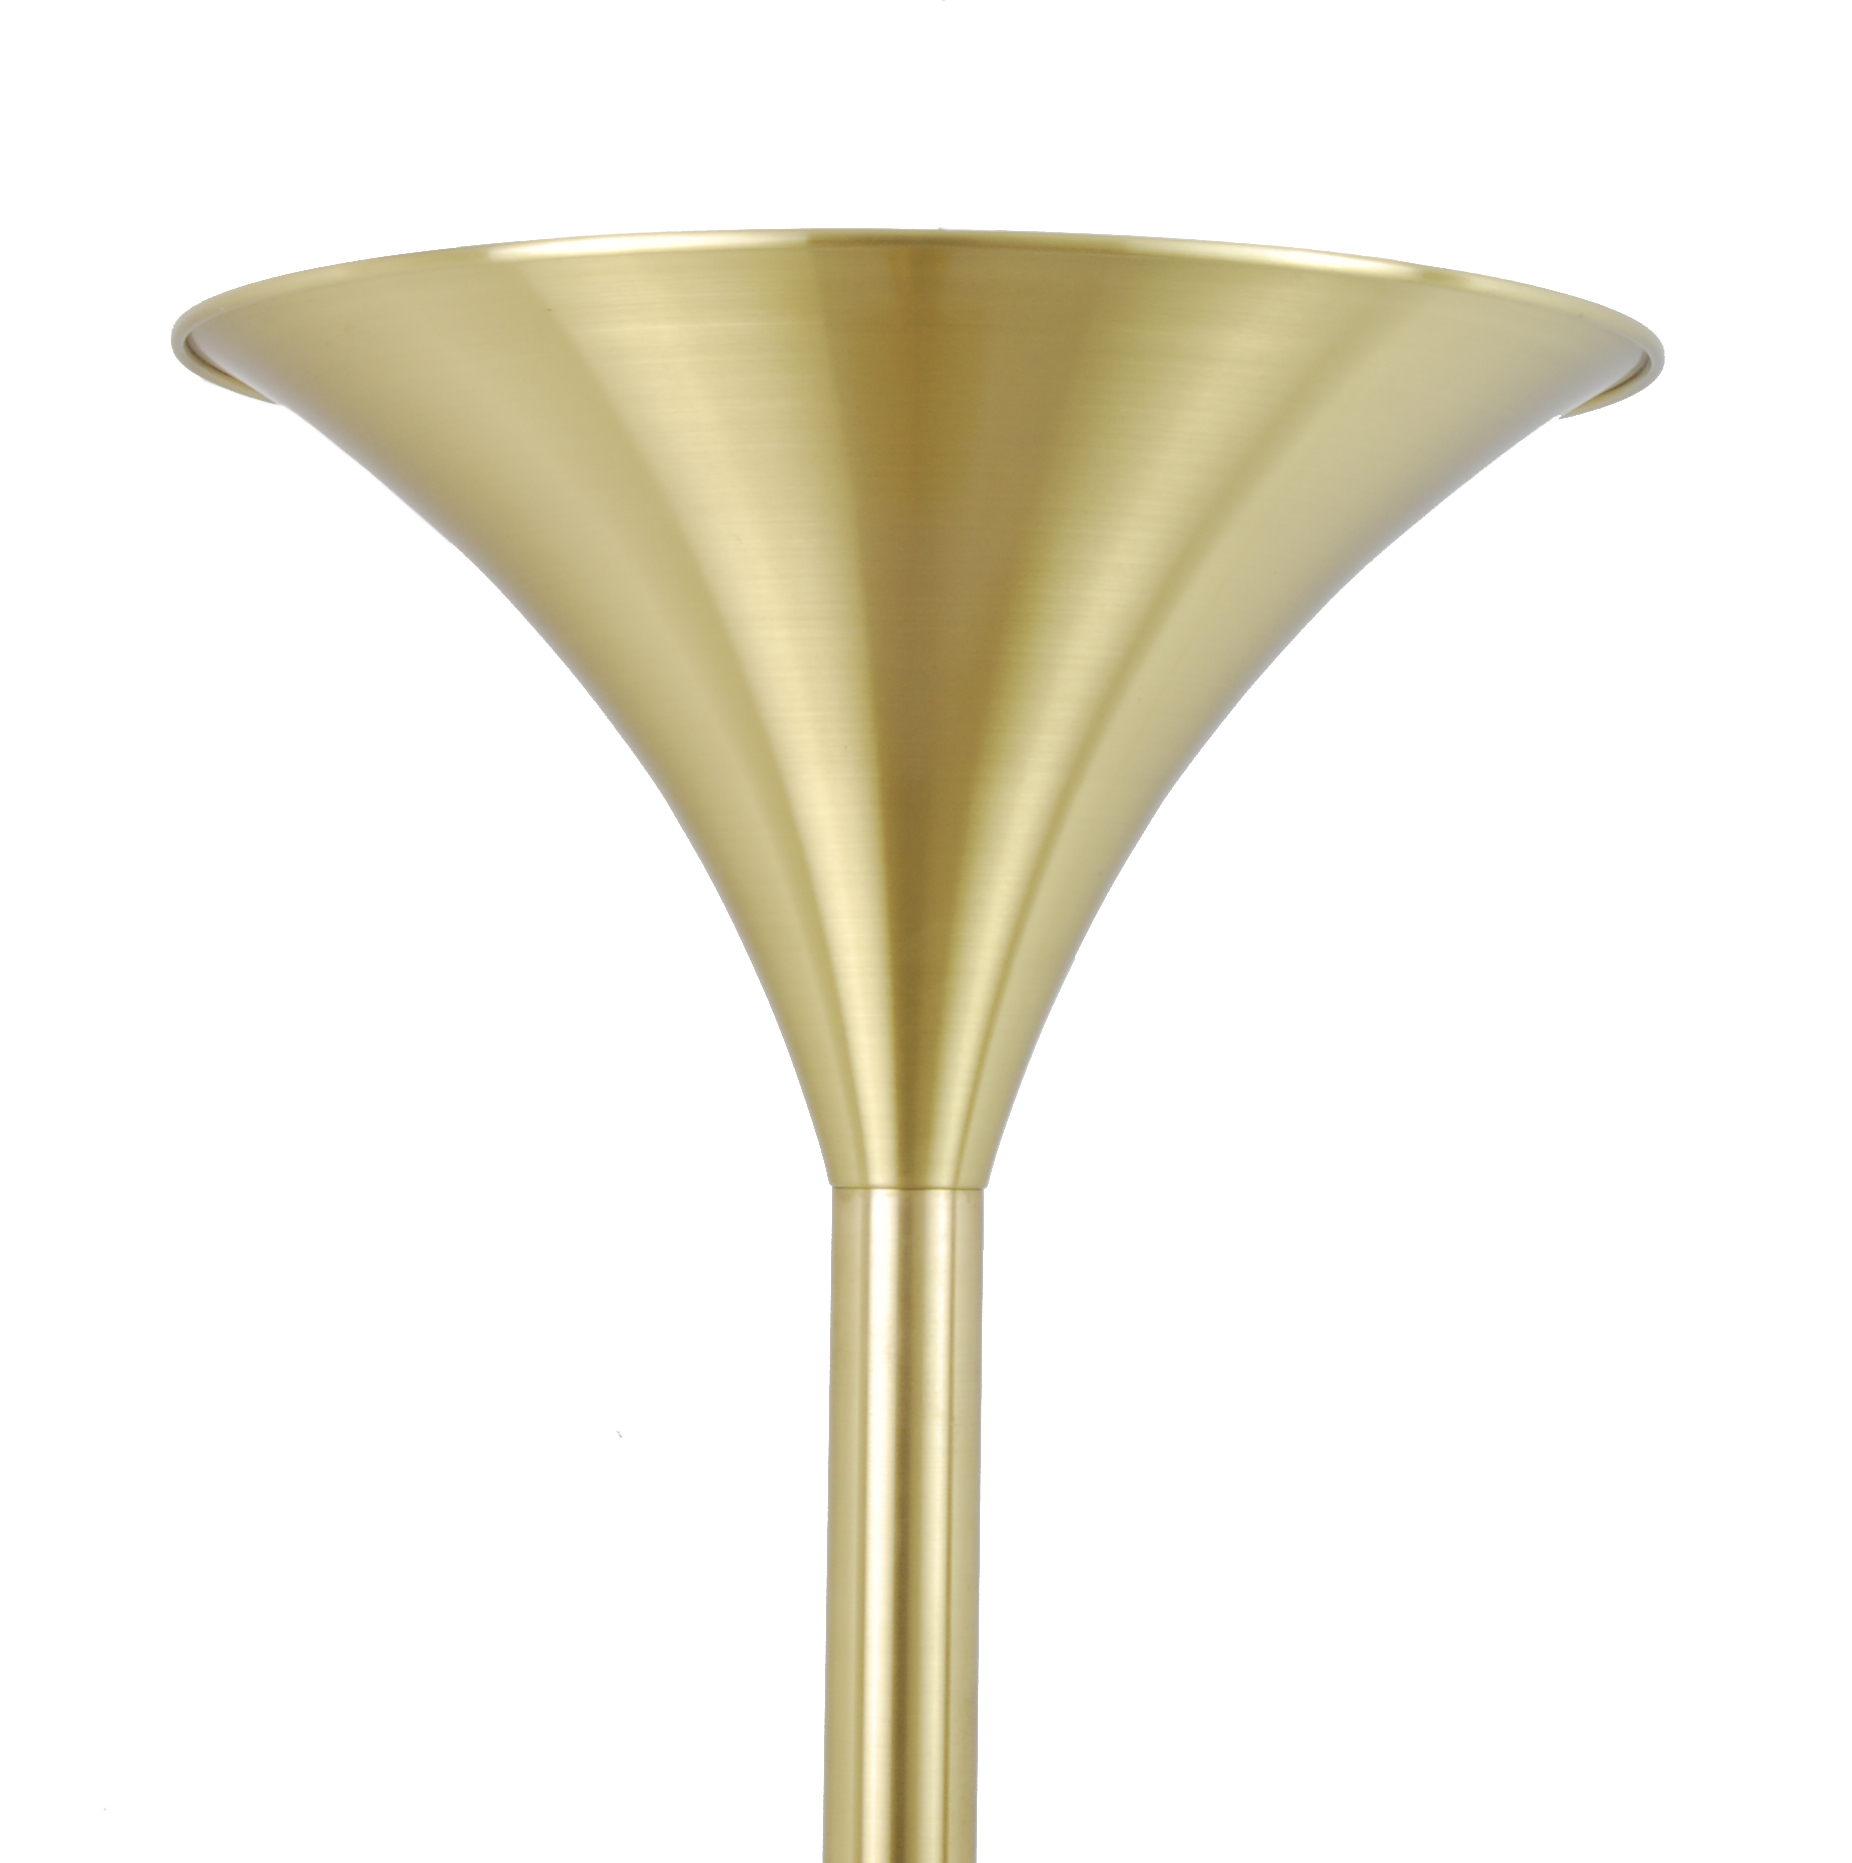 Art Deco Floor Lamp with Trumpet Shade